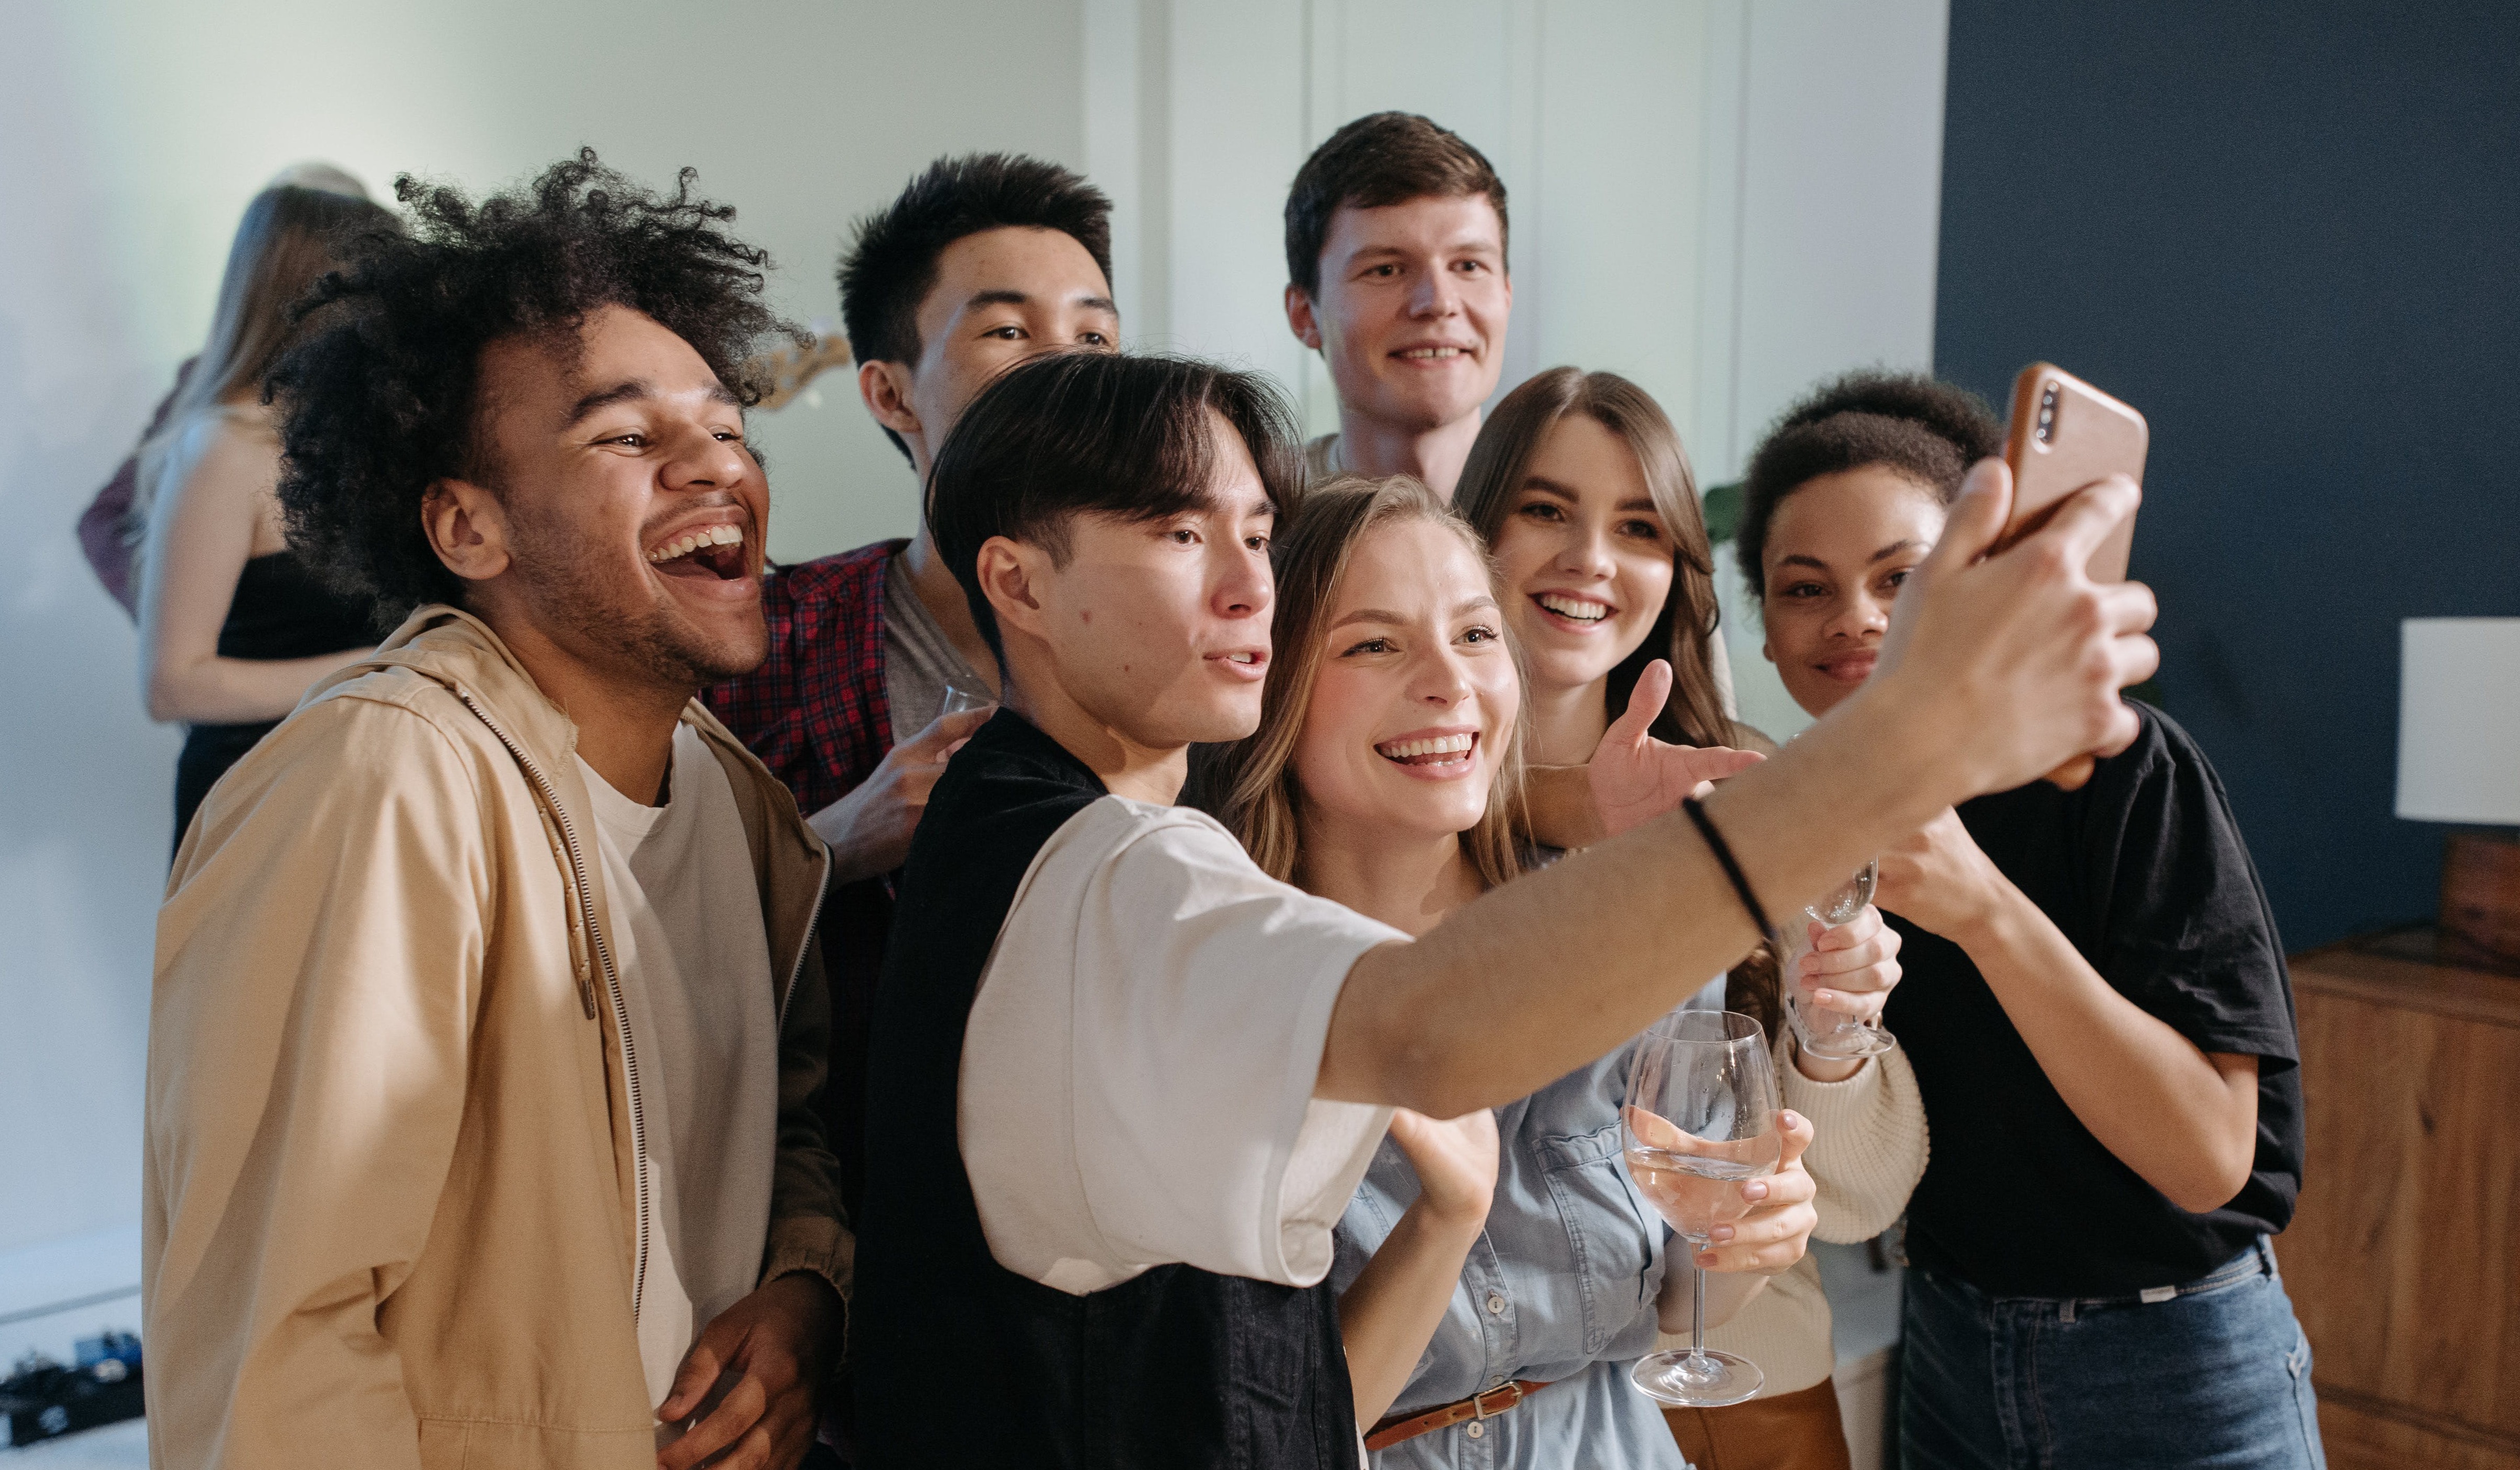 A wide shot of a smiling group selfie taken indoors.